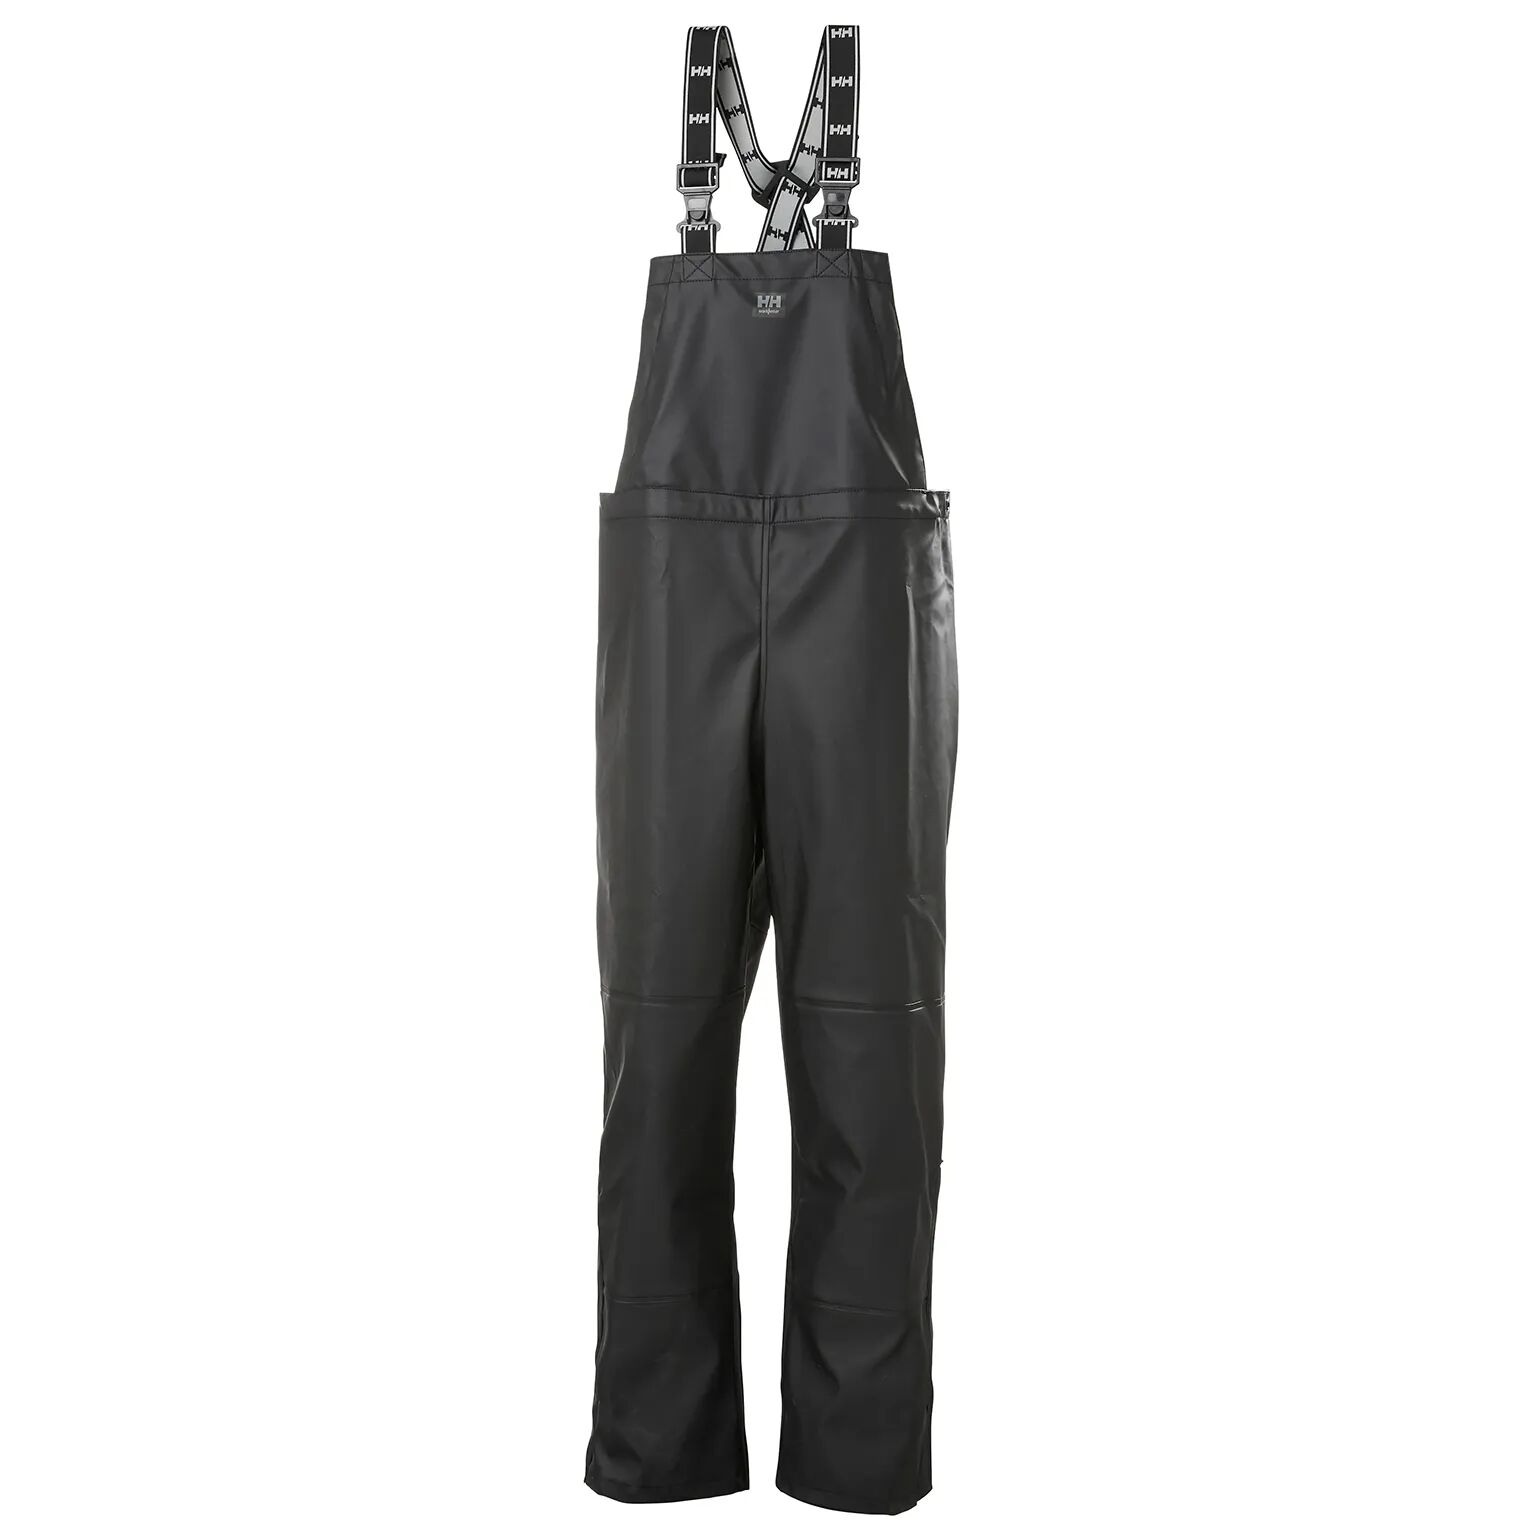 HH Workwear Helly Hansen WorkwearImpertech Waterproof Overall Bib Pants Black XXXL